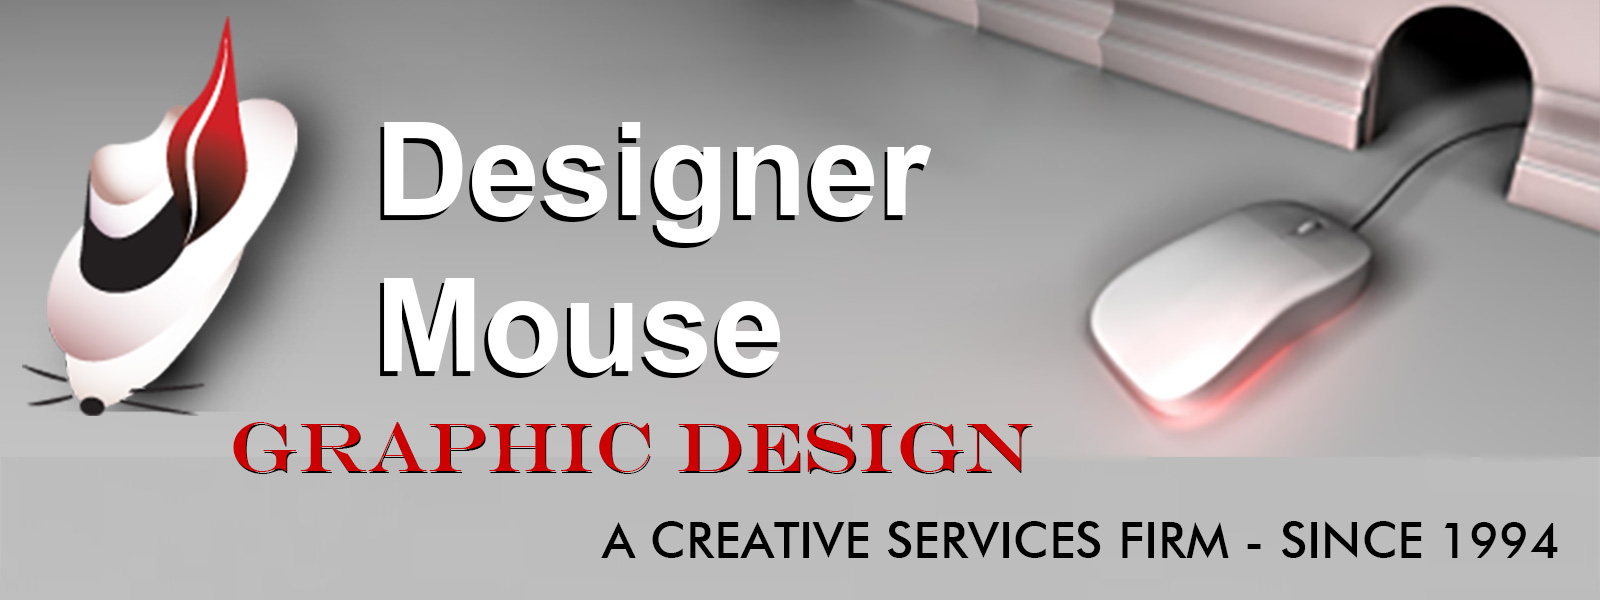 Designer Mouse Graphic Design, offering web and graphic design